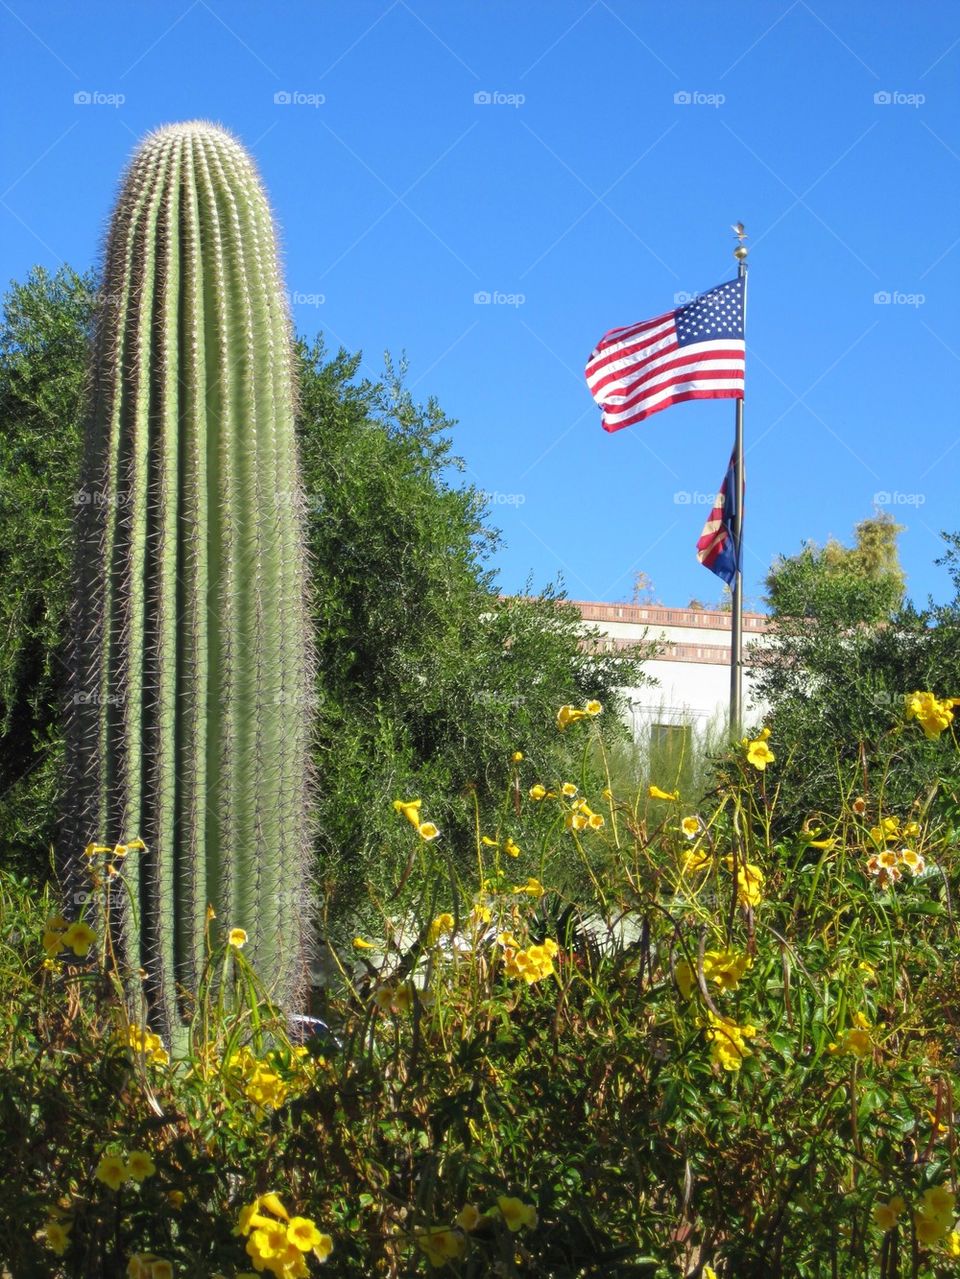 cactus arizona flag american flag by jeanello